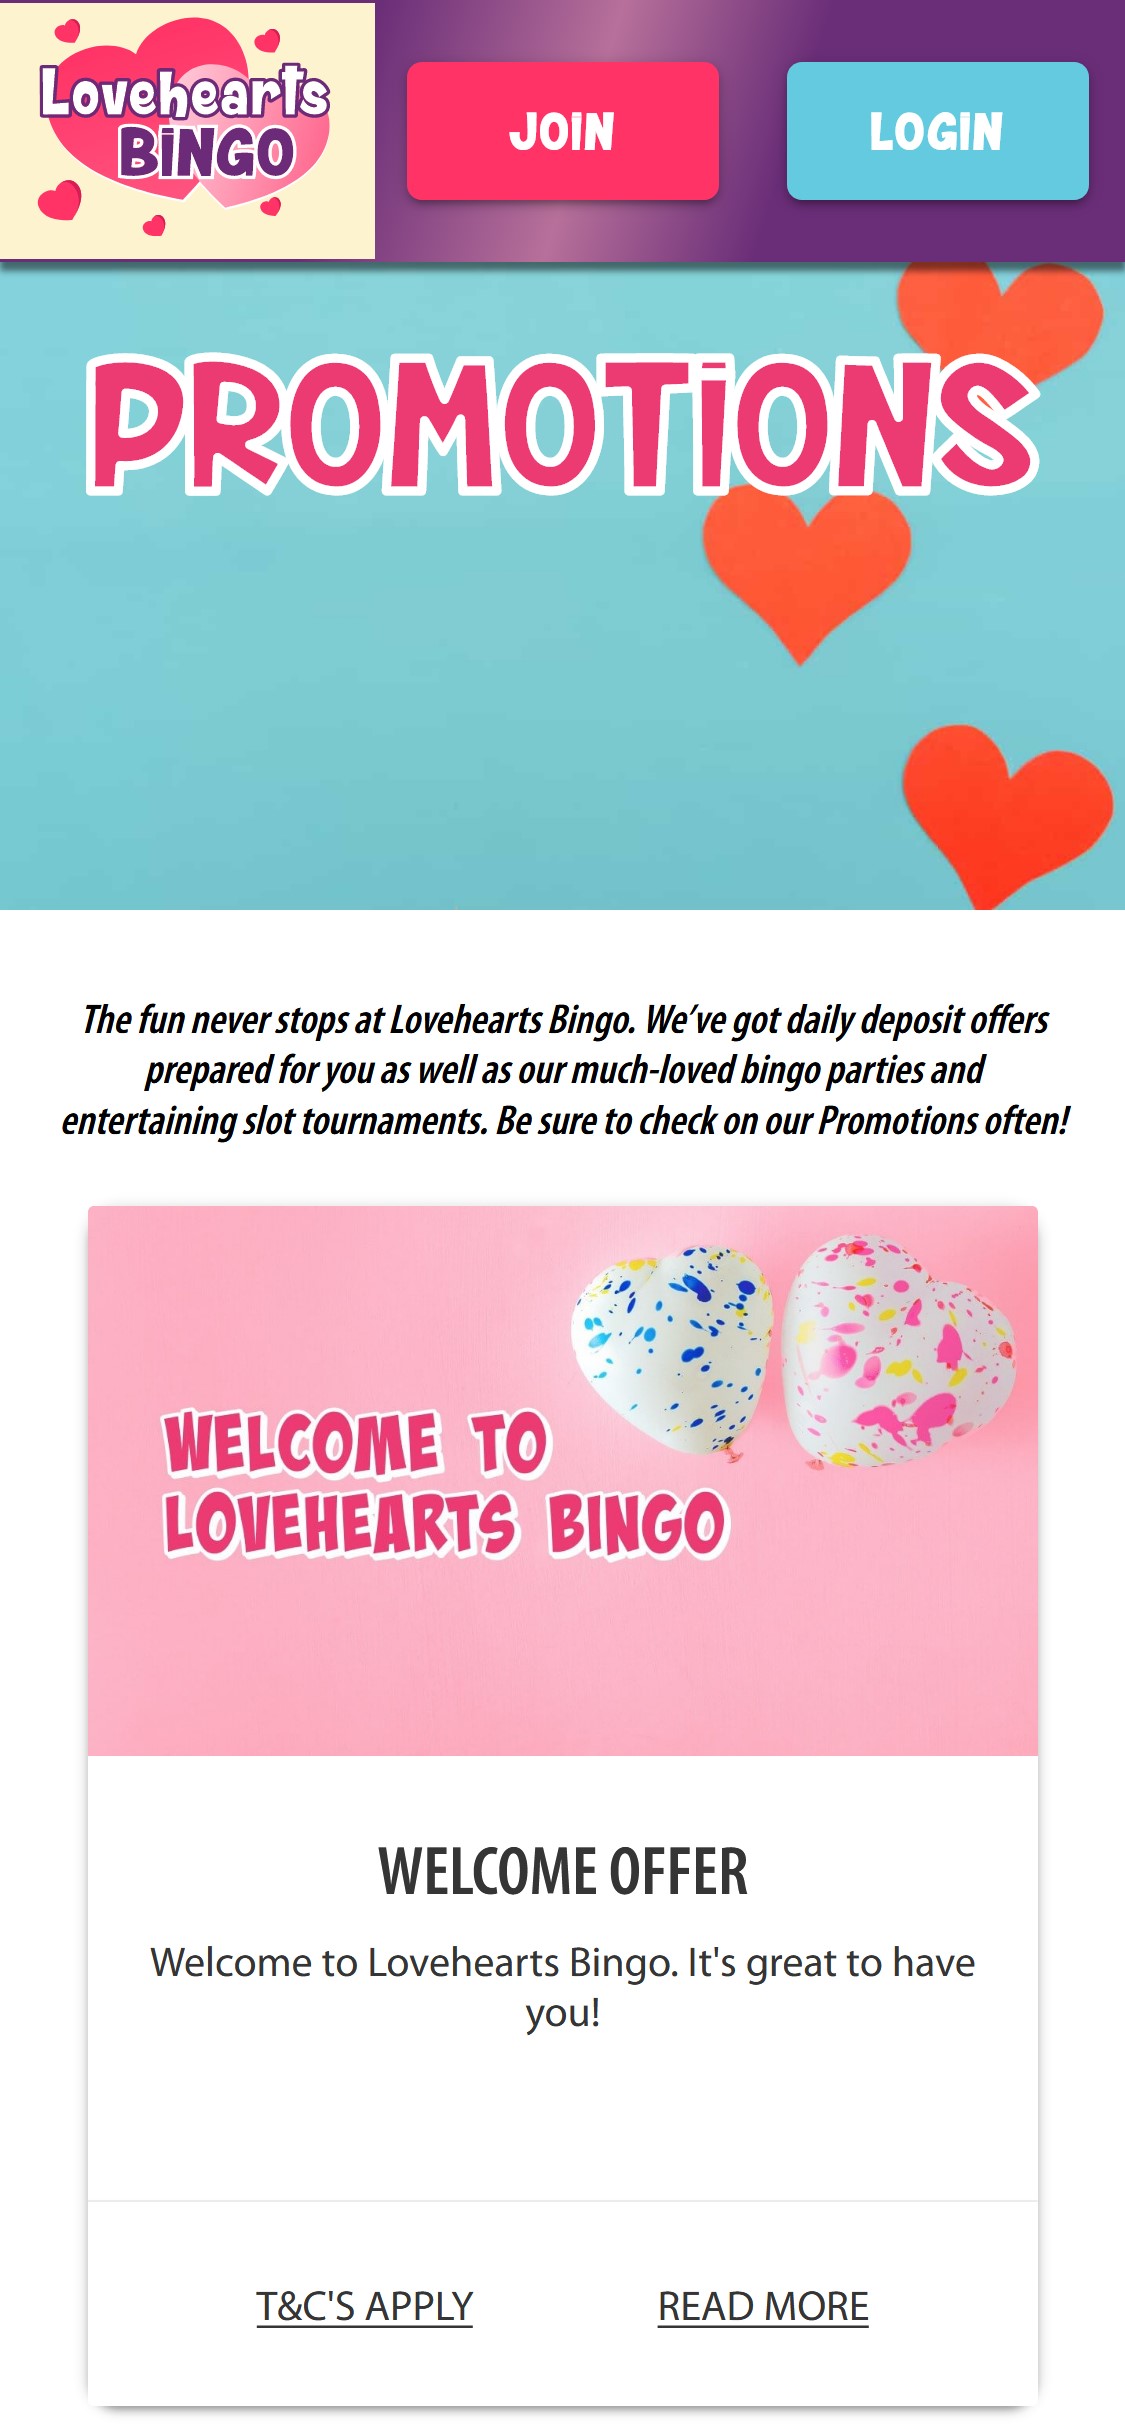 Love Hearts Bingo Casino Mobile No Deposit Bonus Review